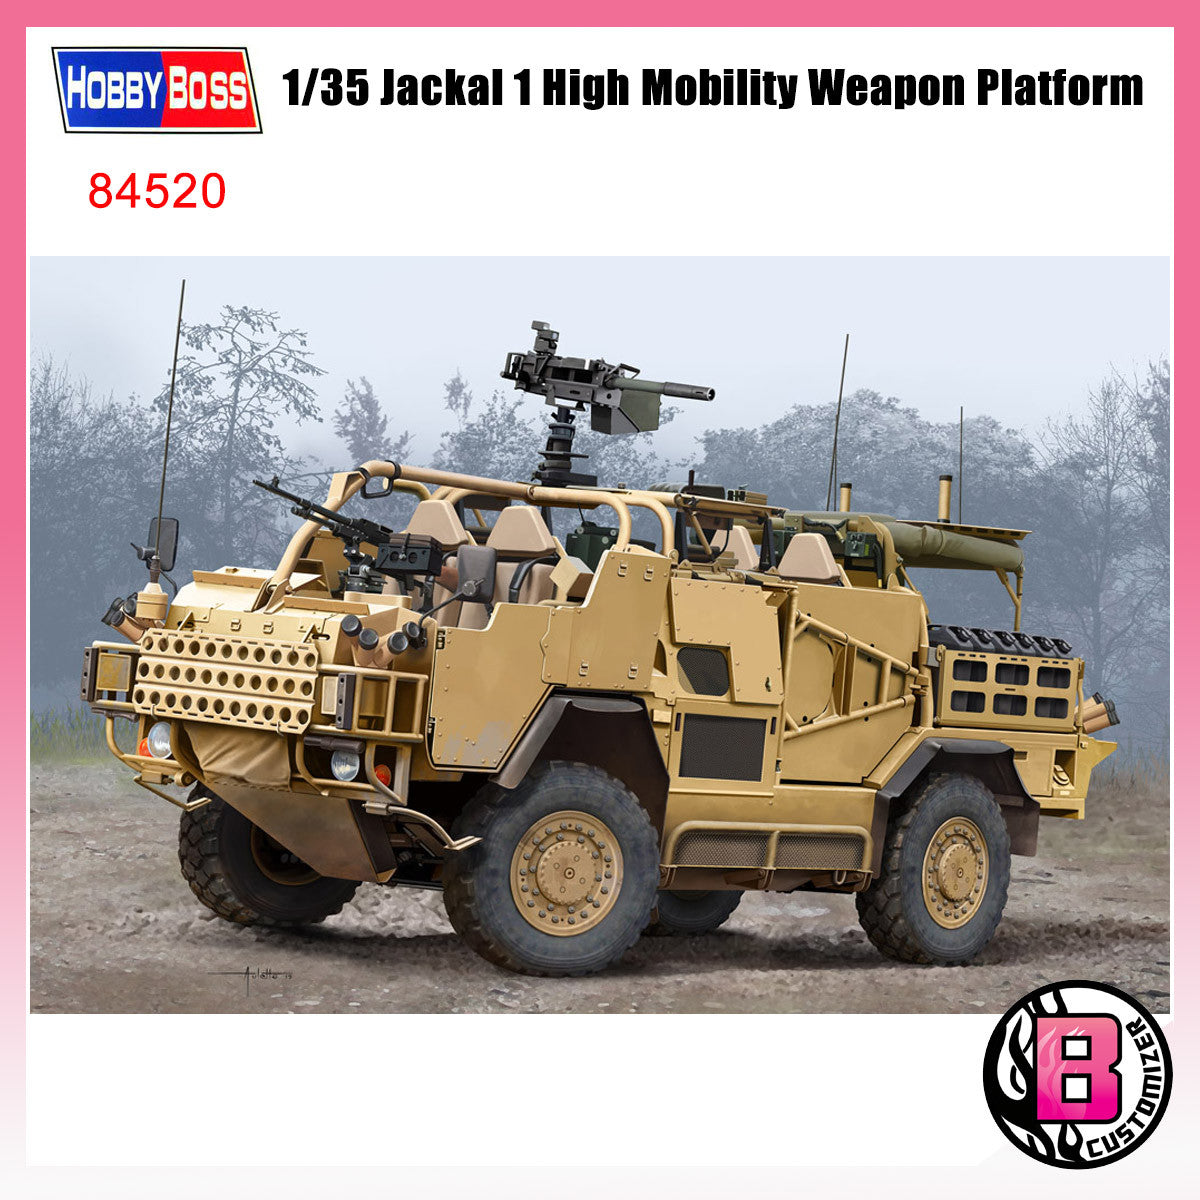 HobbyBoss 1/35 Jackal 1 High Mobility Weapon Platform ( 84520 )